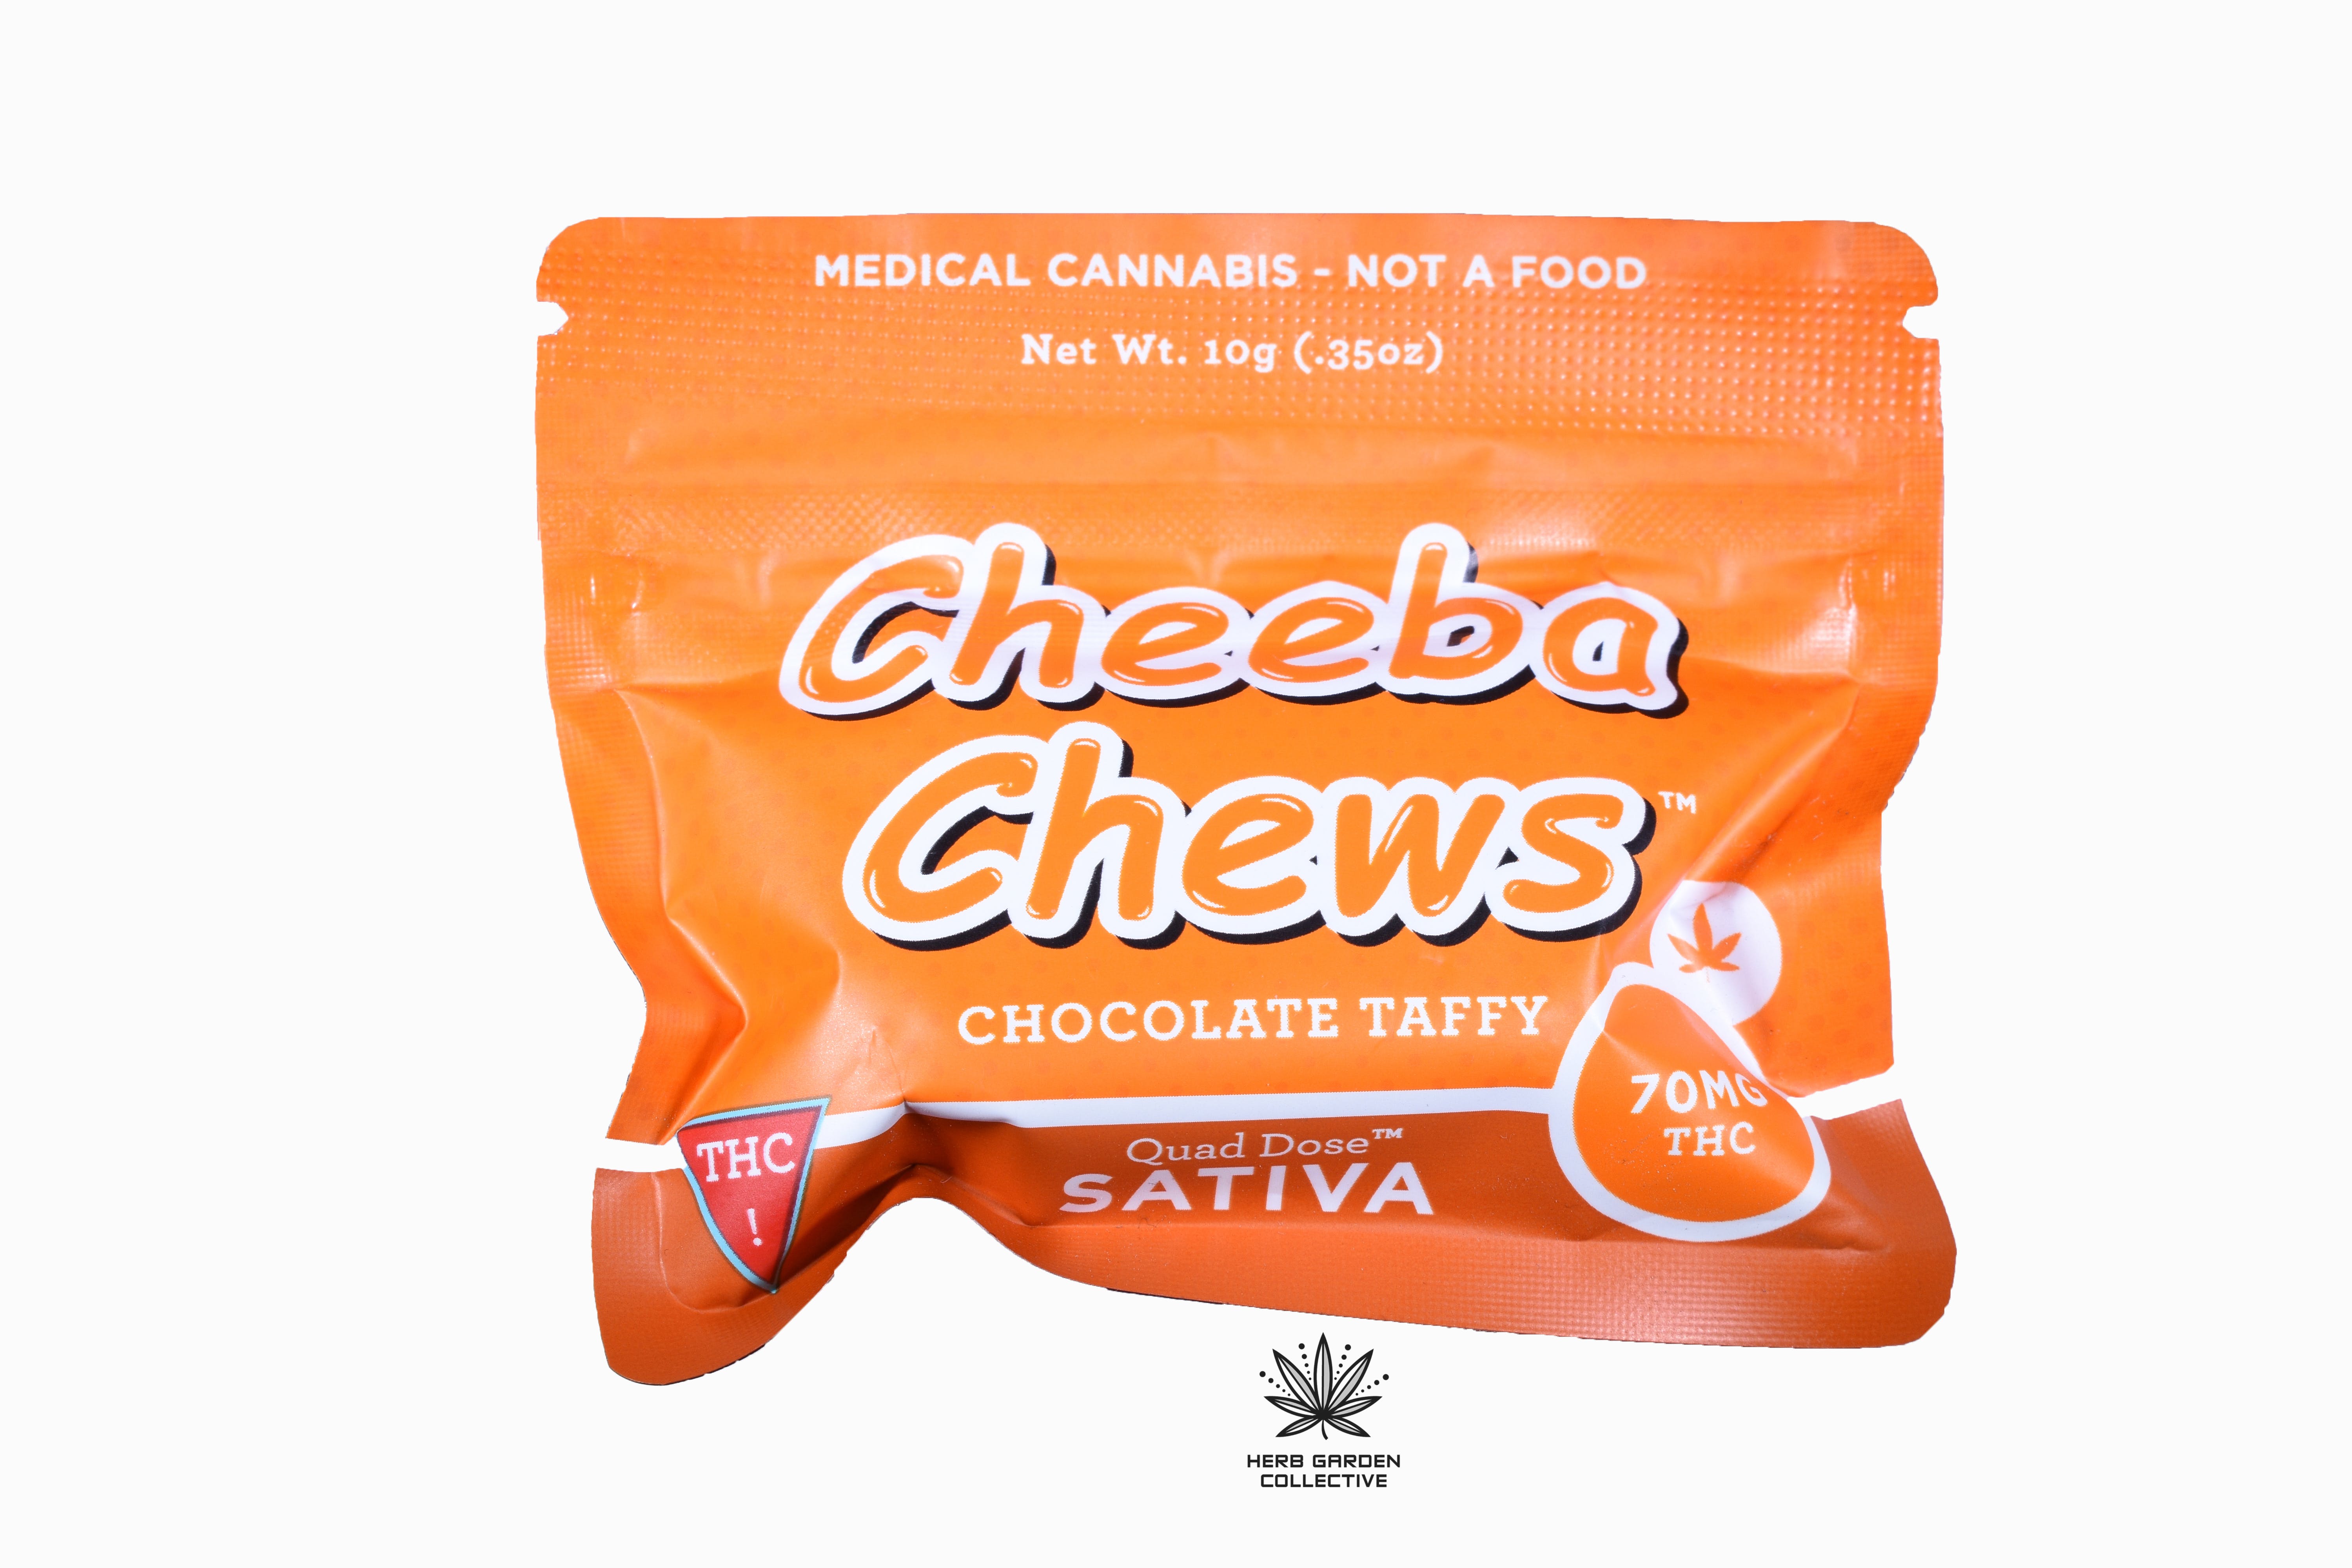 marijuana-dispensaries-820-south-main-st-los-angeles-cheeba-chews-chocolate-taffy-sativa-70mg